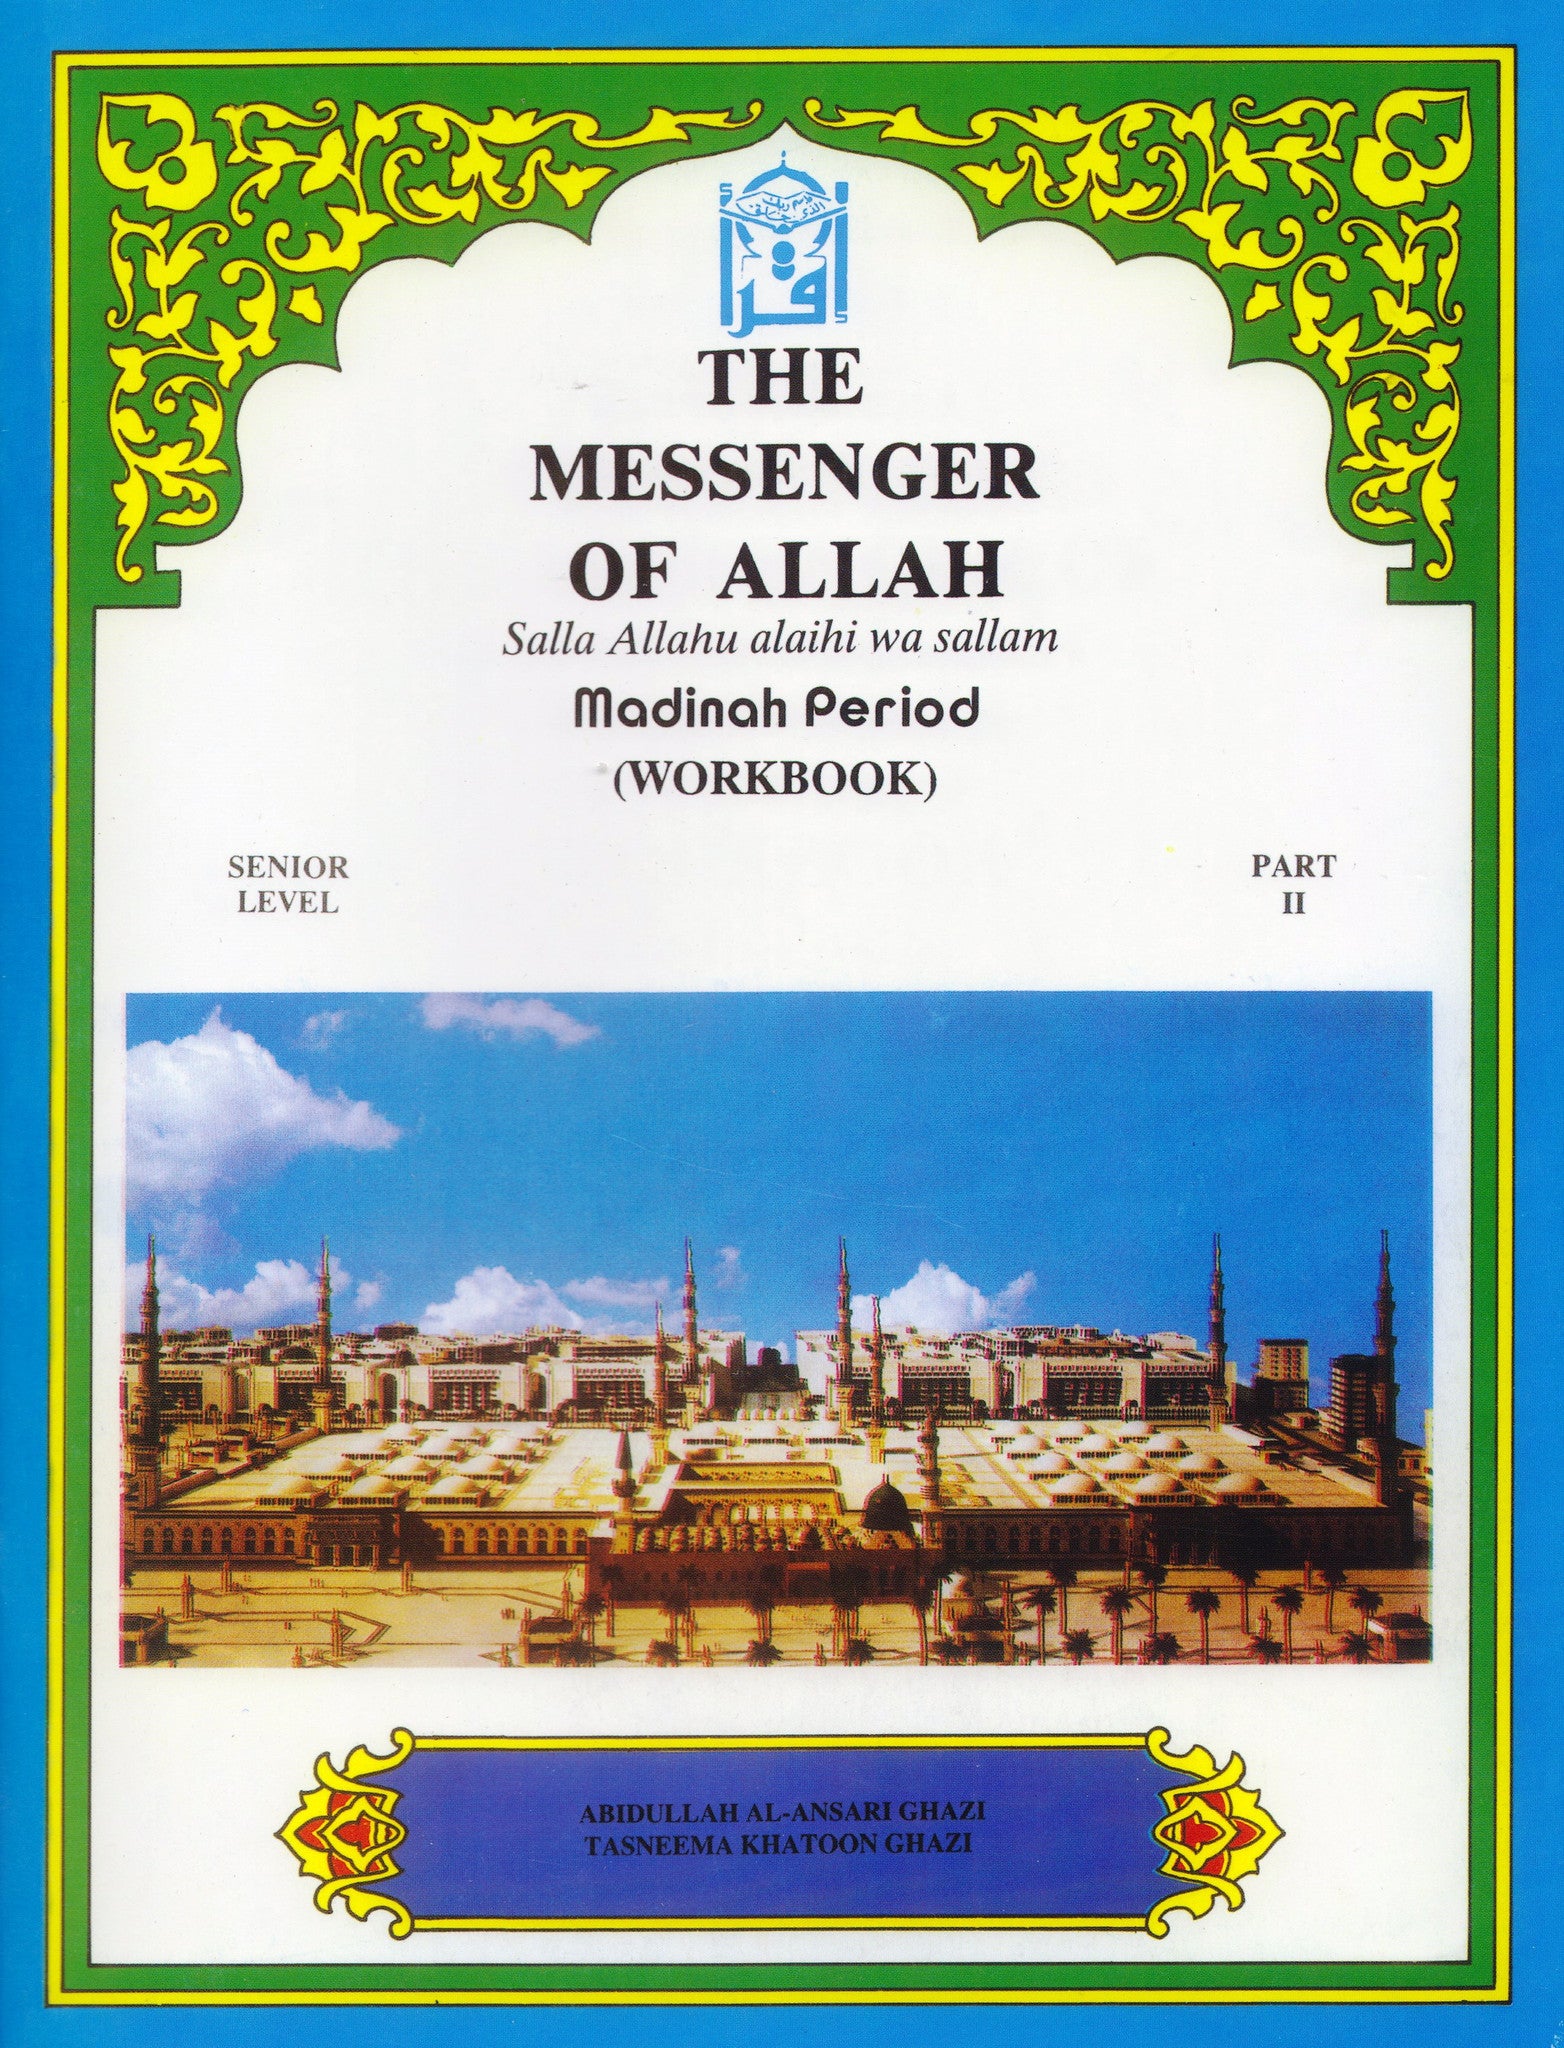 The Messenger of Allah Madinah Period Workbook - 8th Grade